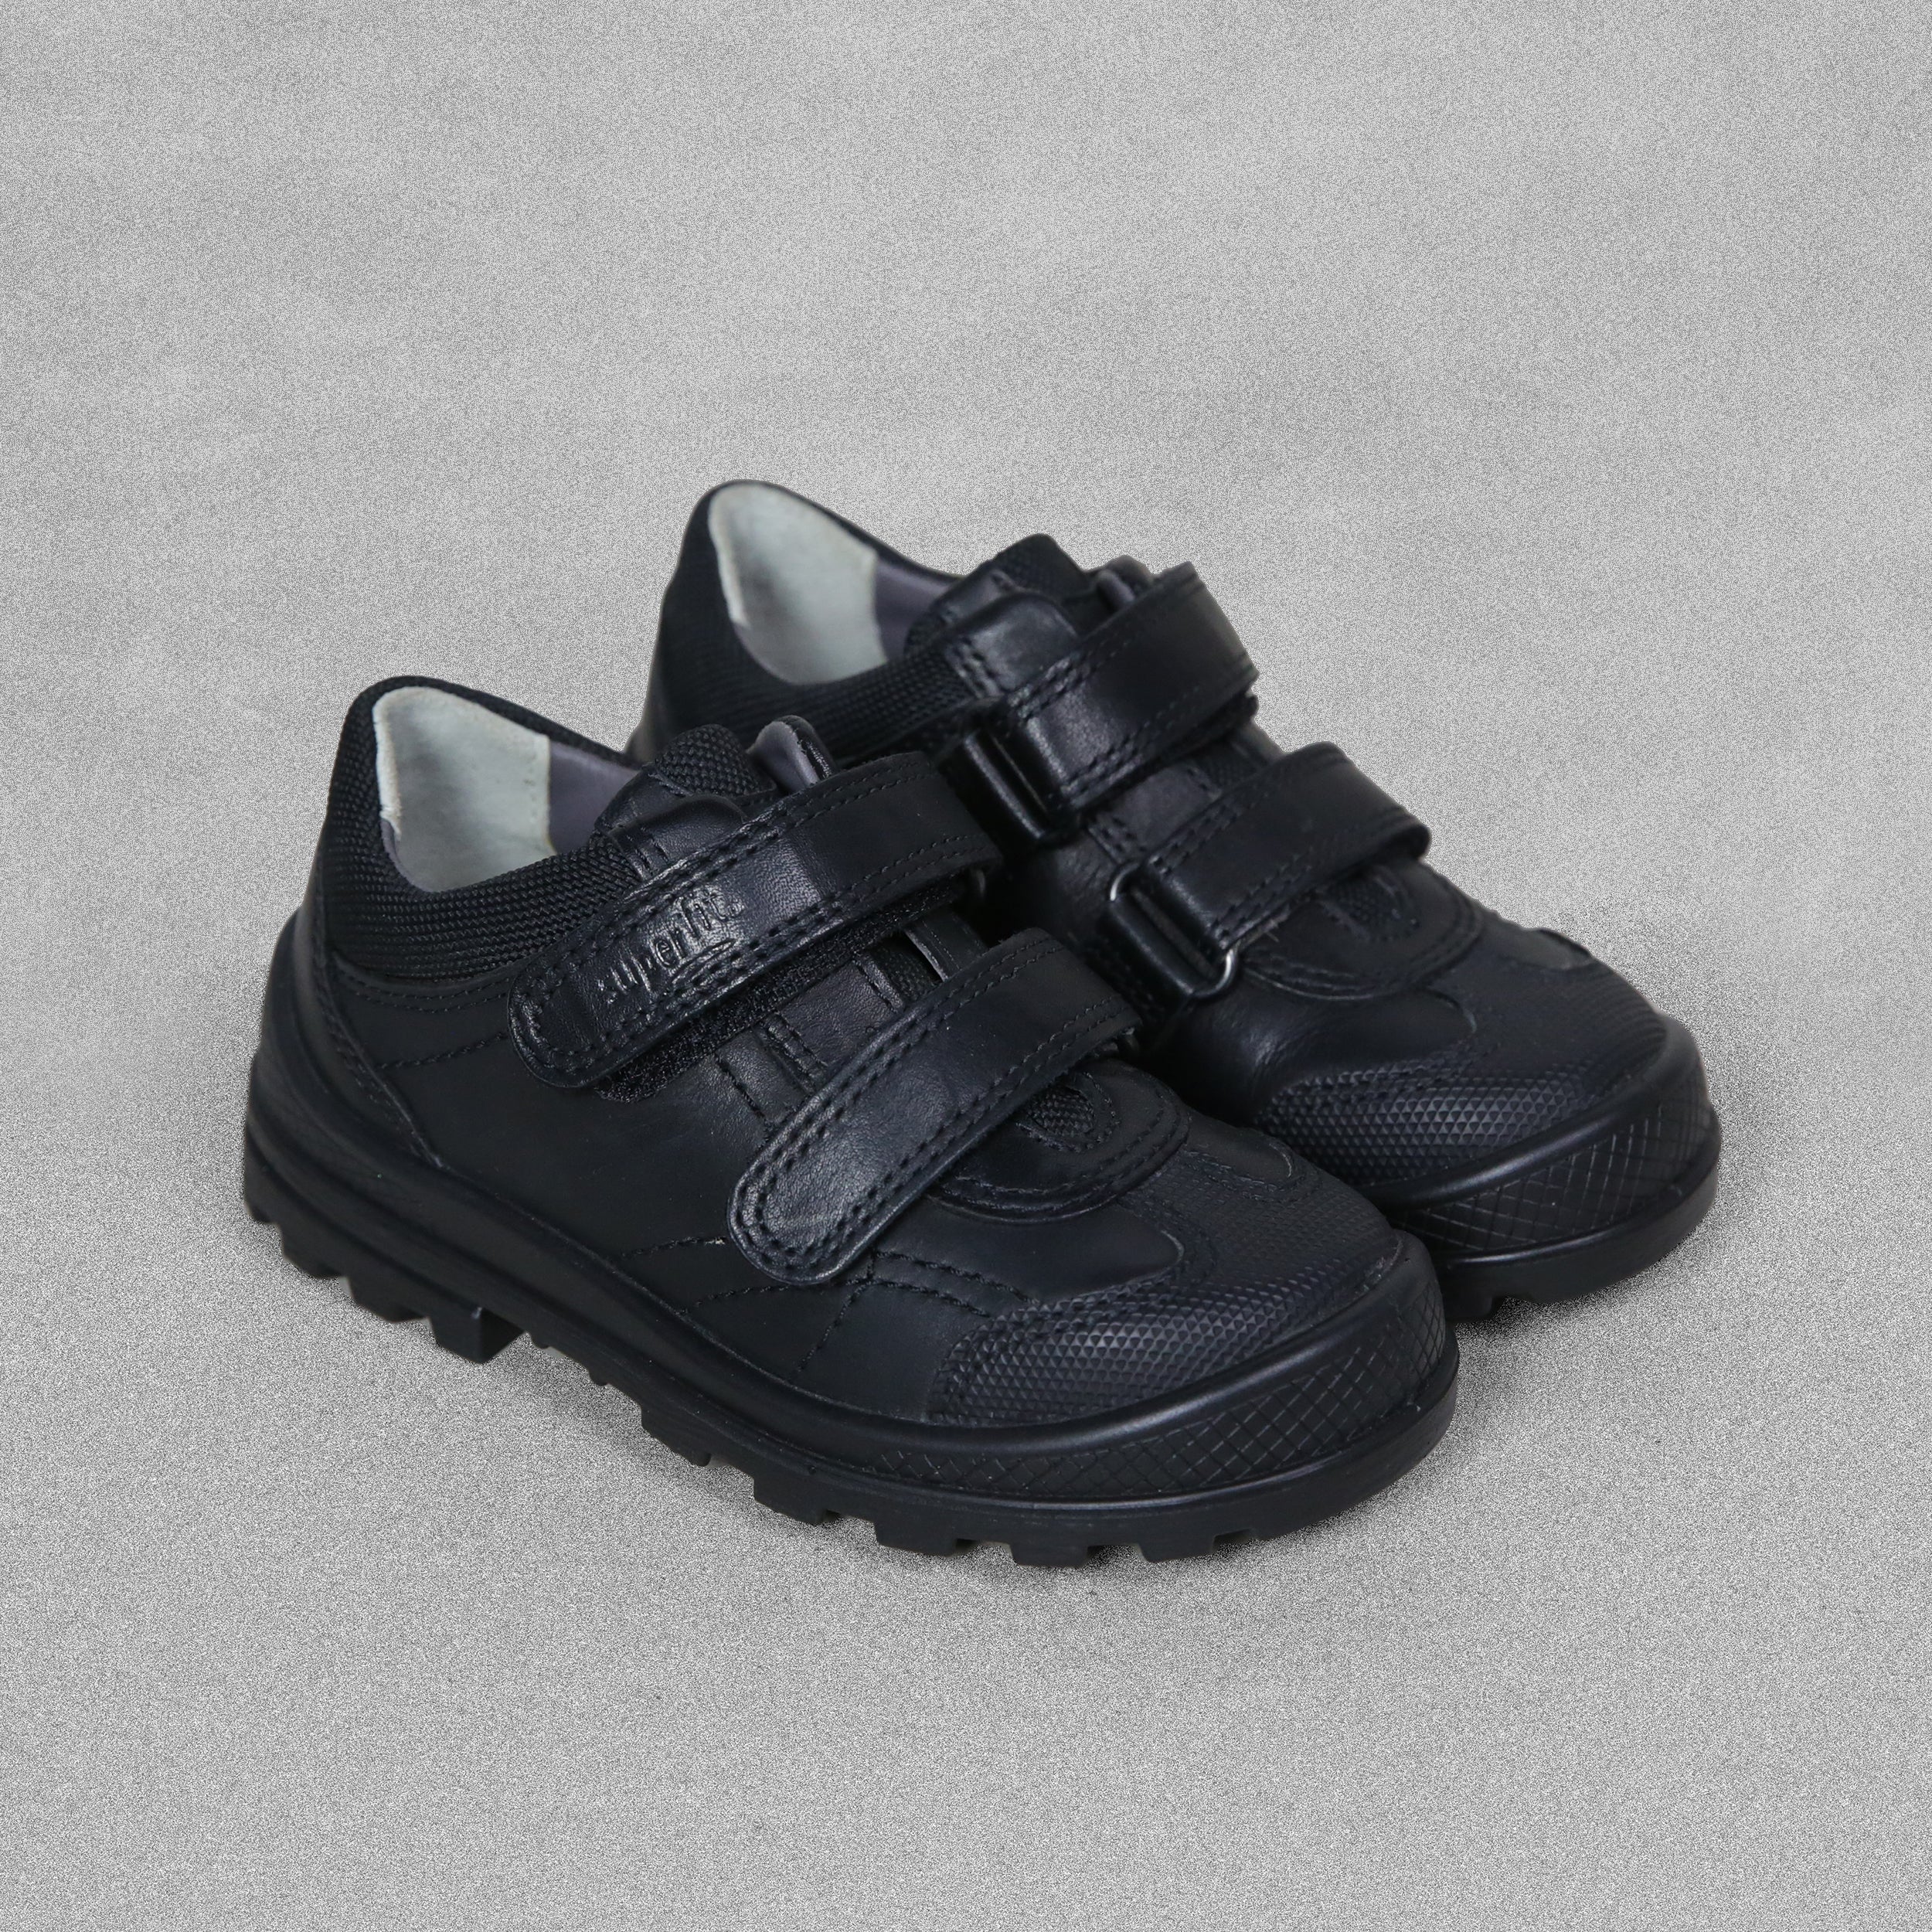 Superfit Kids Boys Black Leather School Shoes - UK Child Size 8